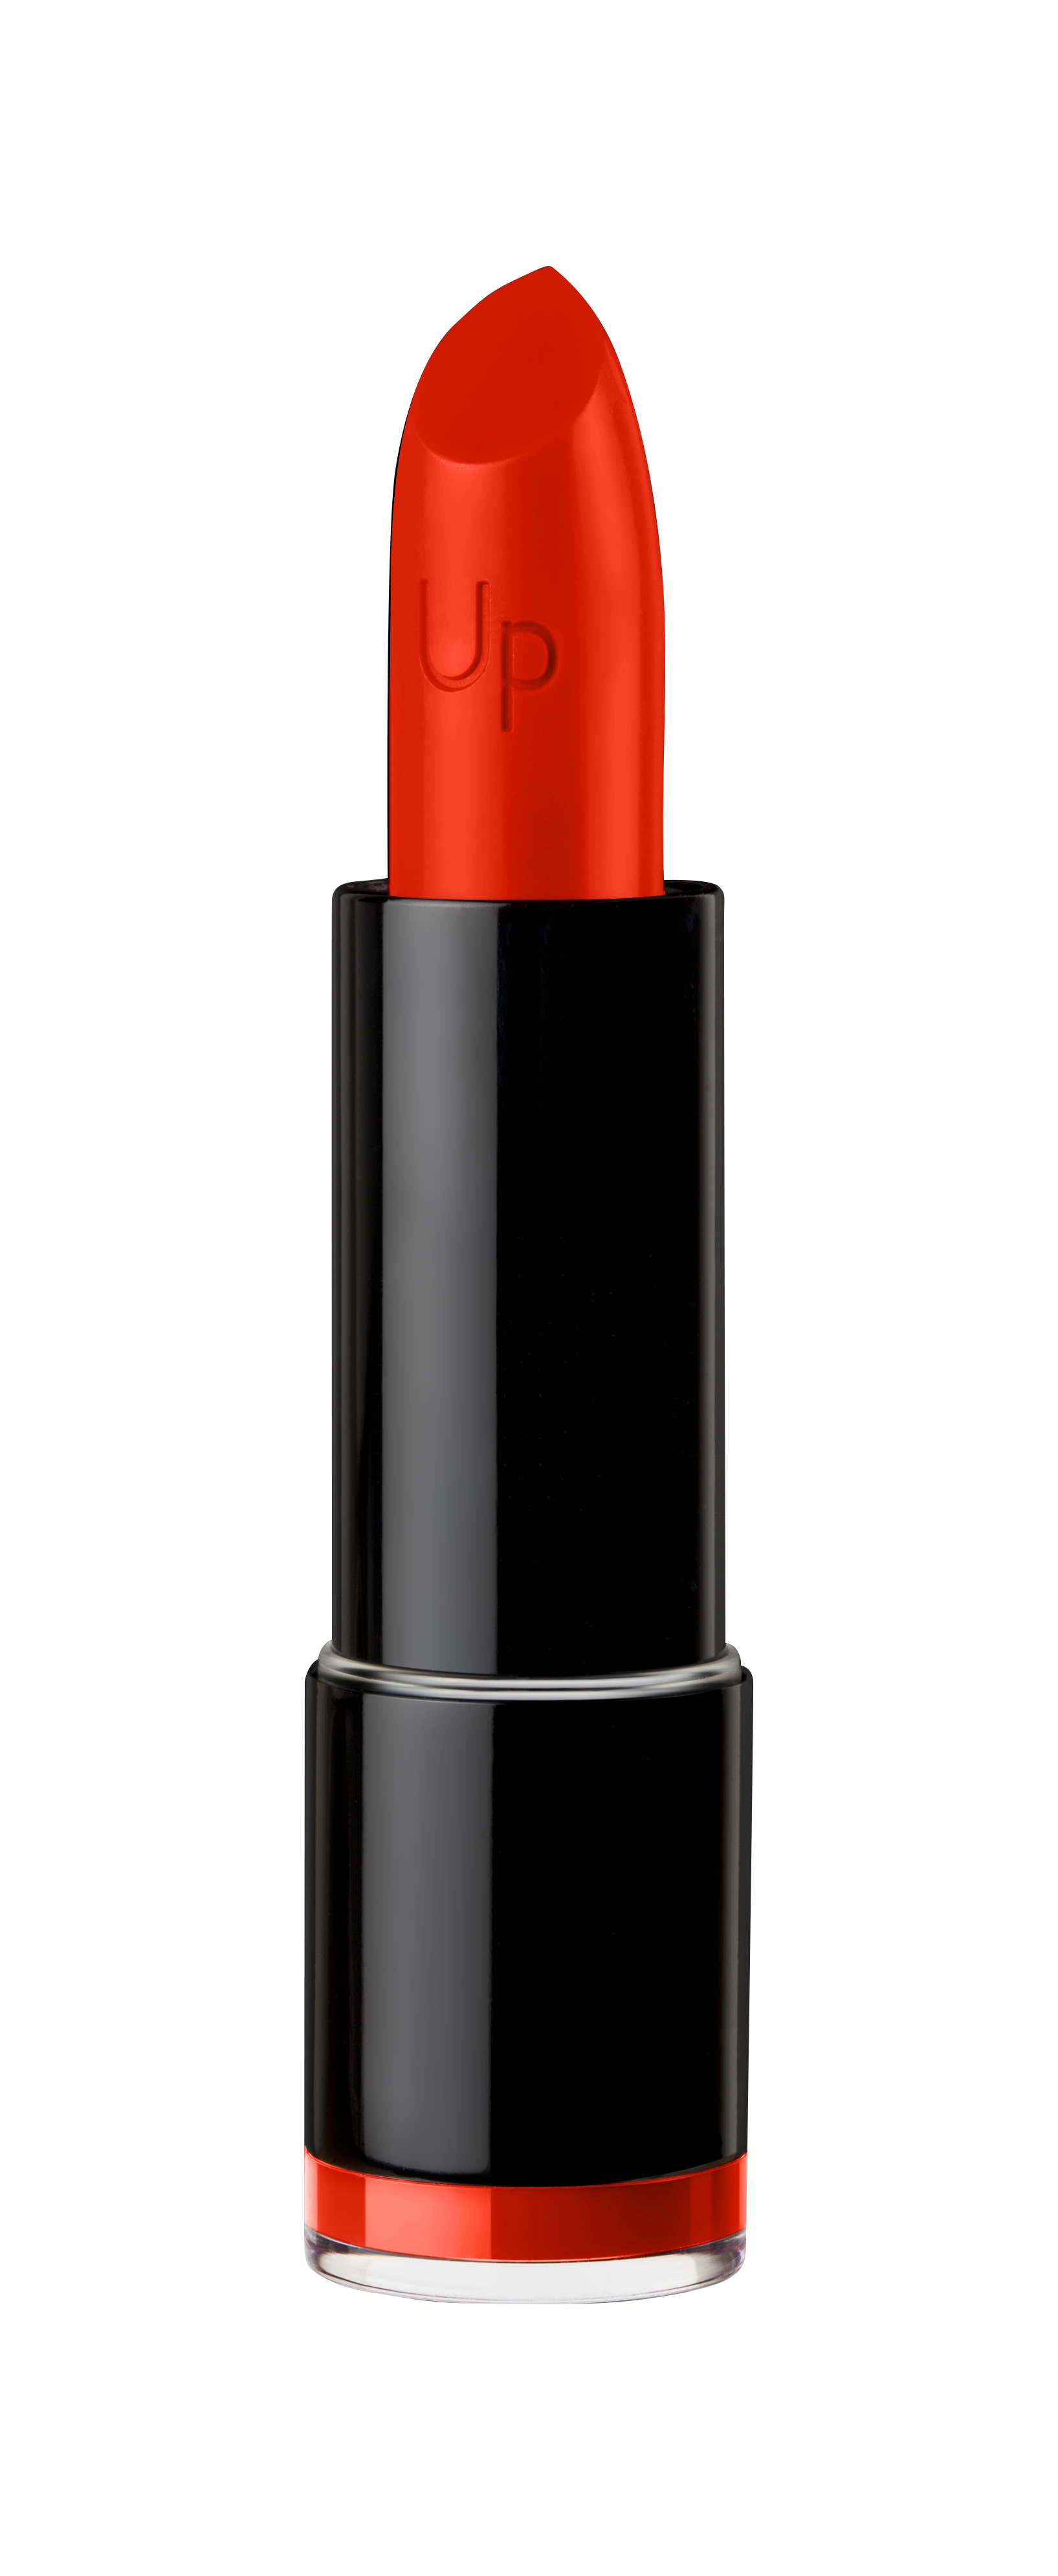 Lipstick Transparent Picture PNG Image